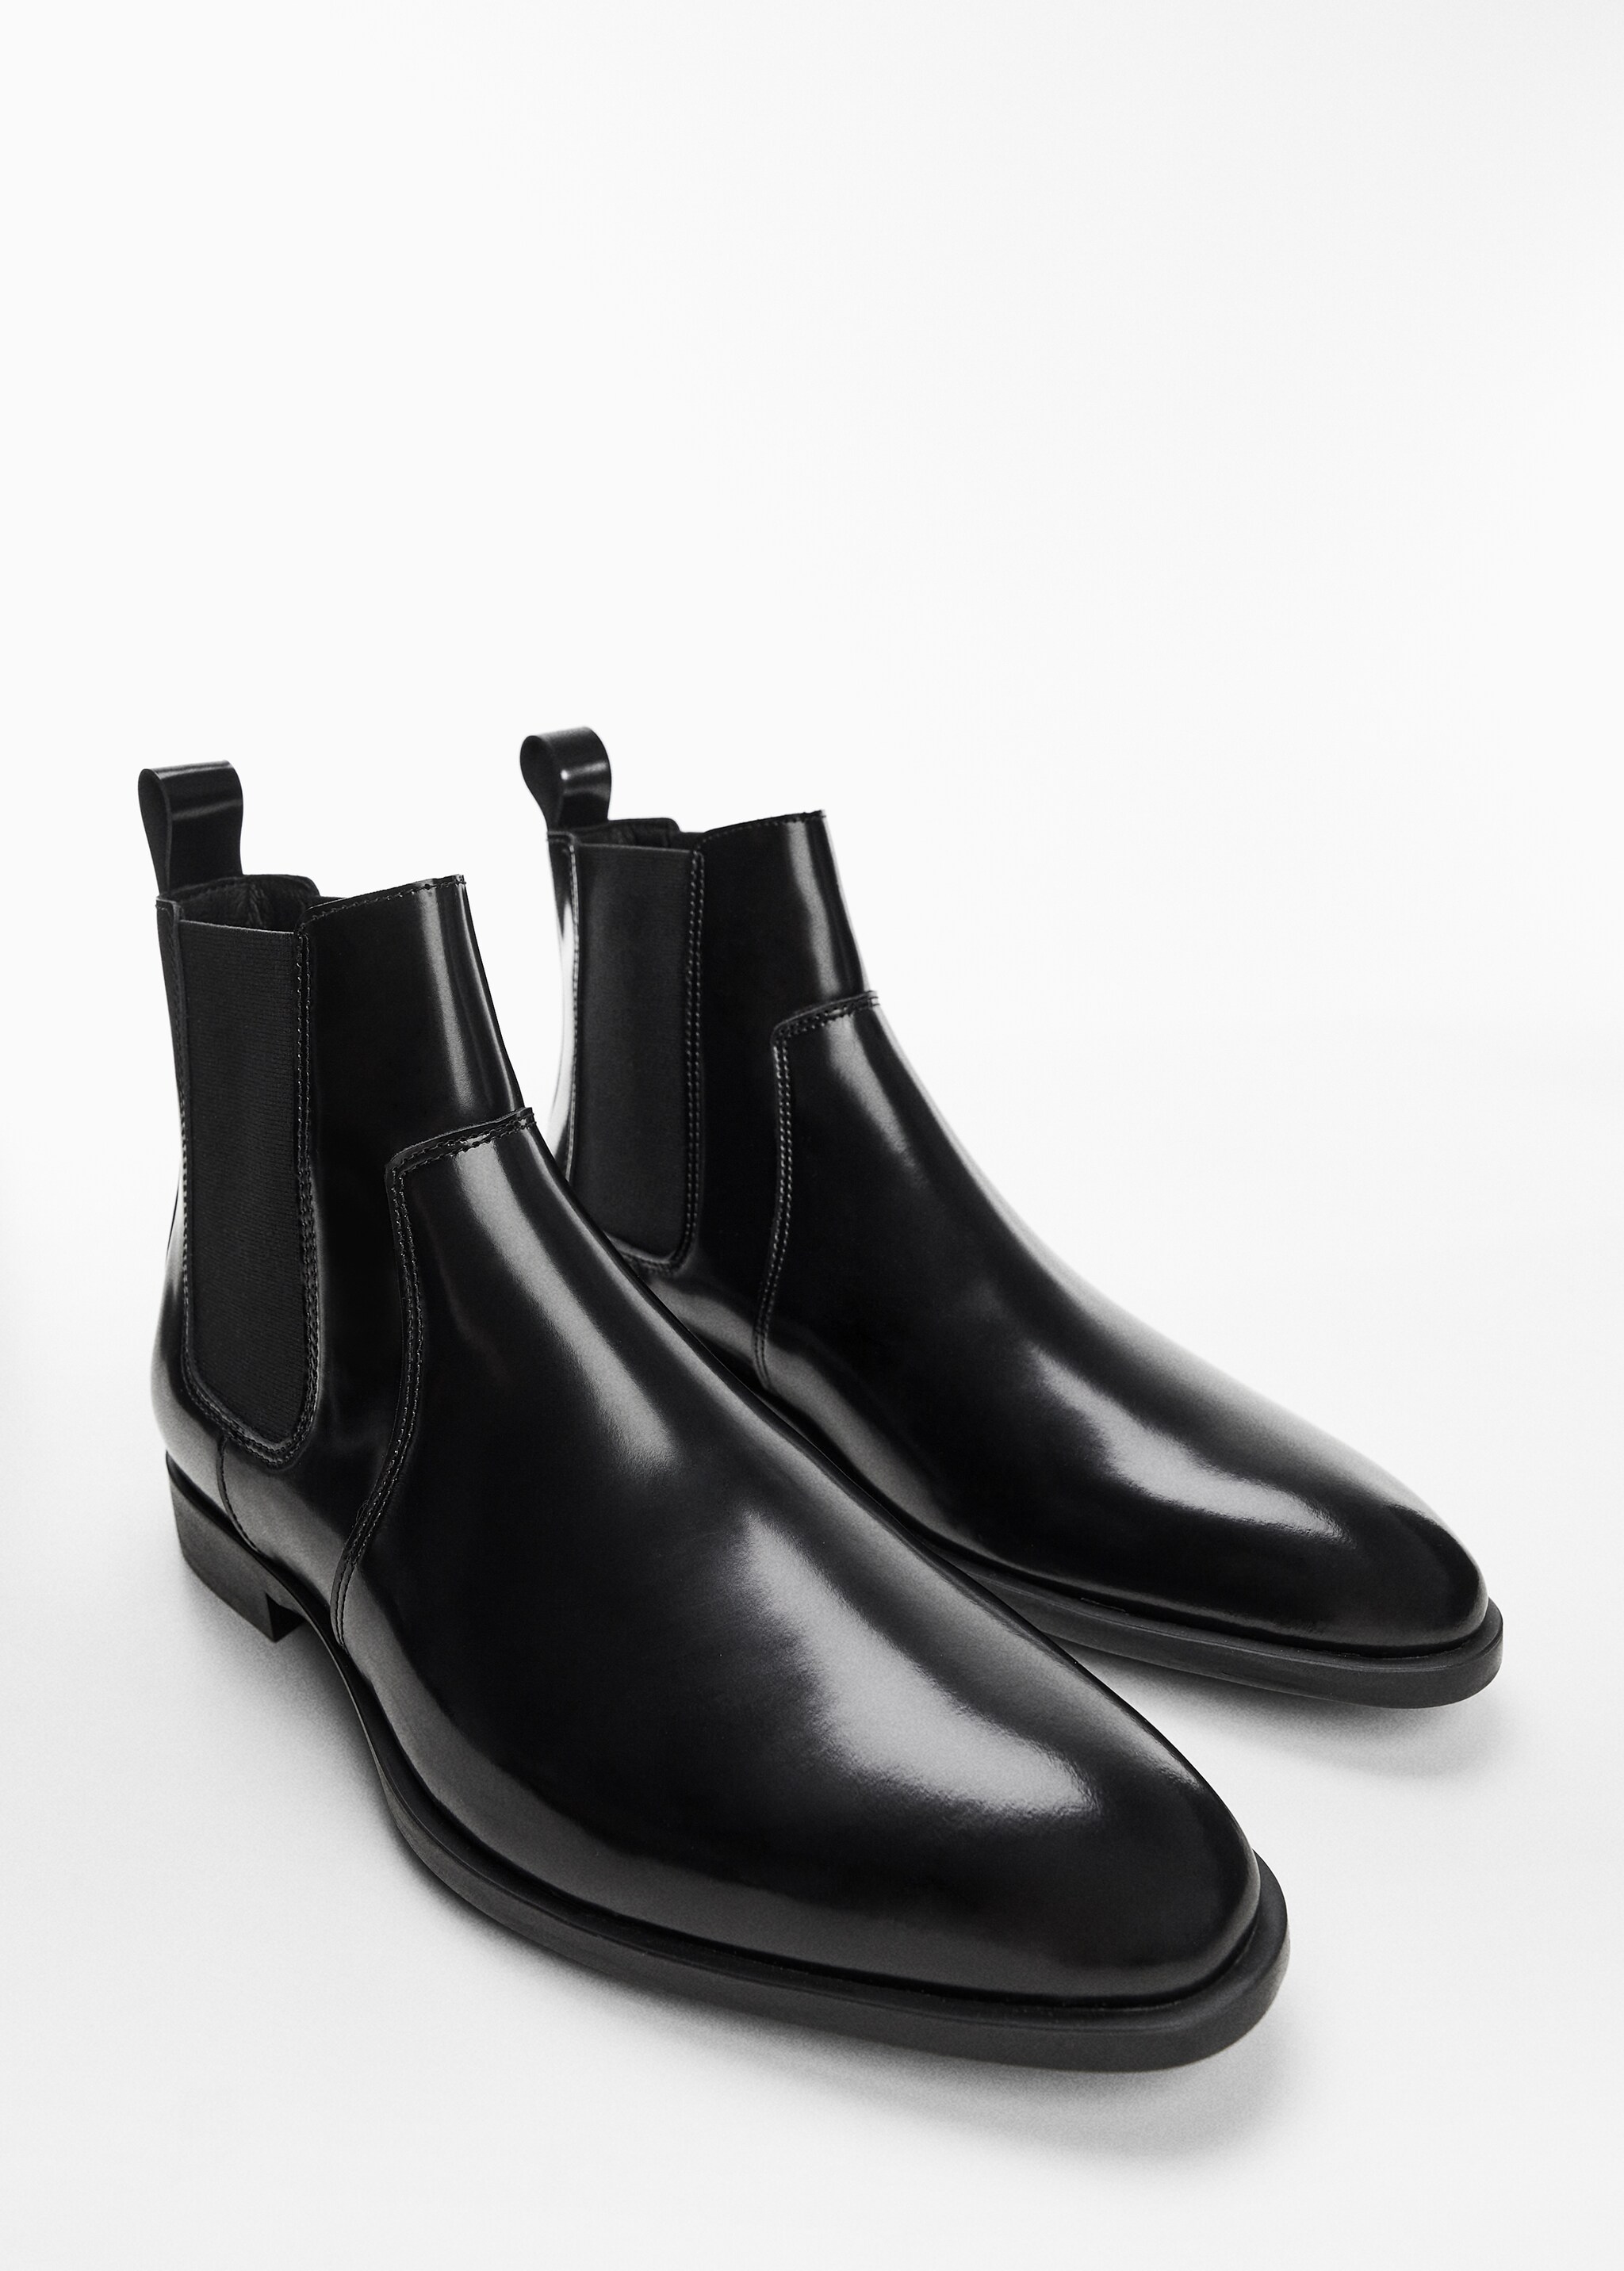 Polished leather chelsea boots - Medium plane